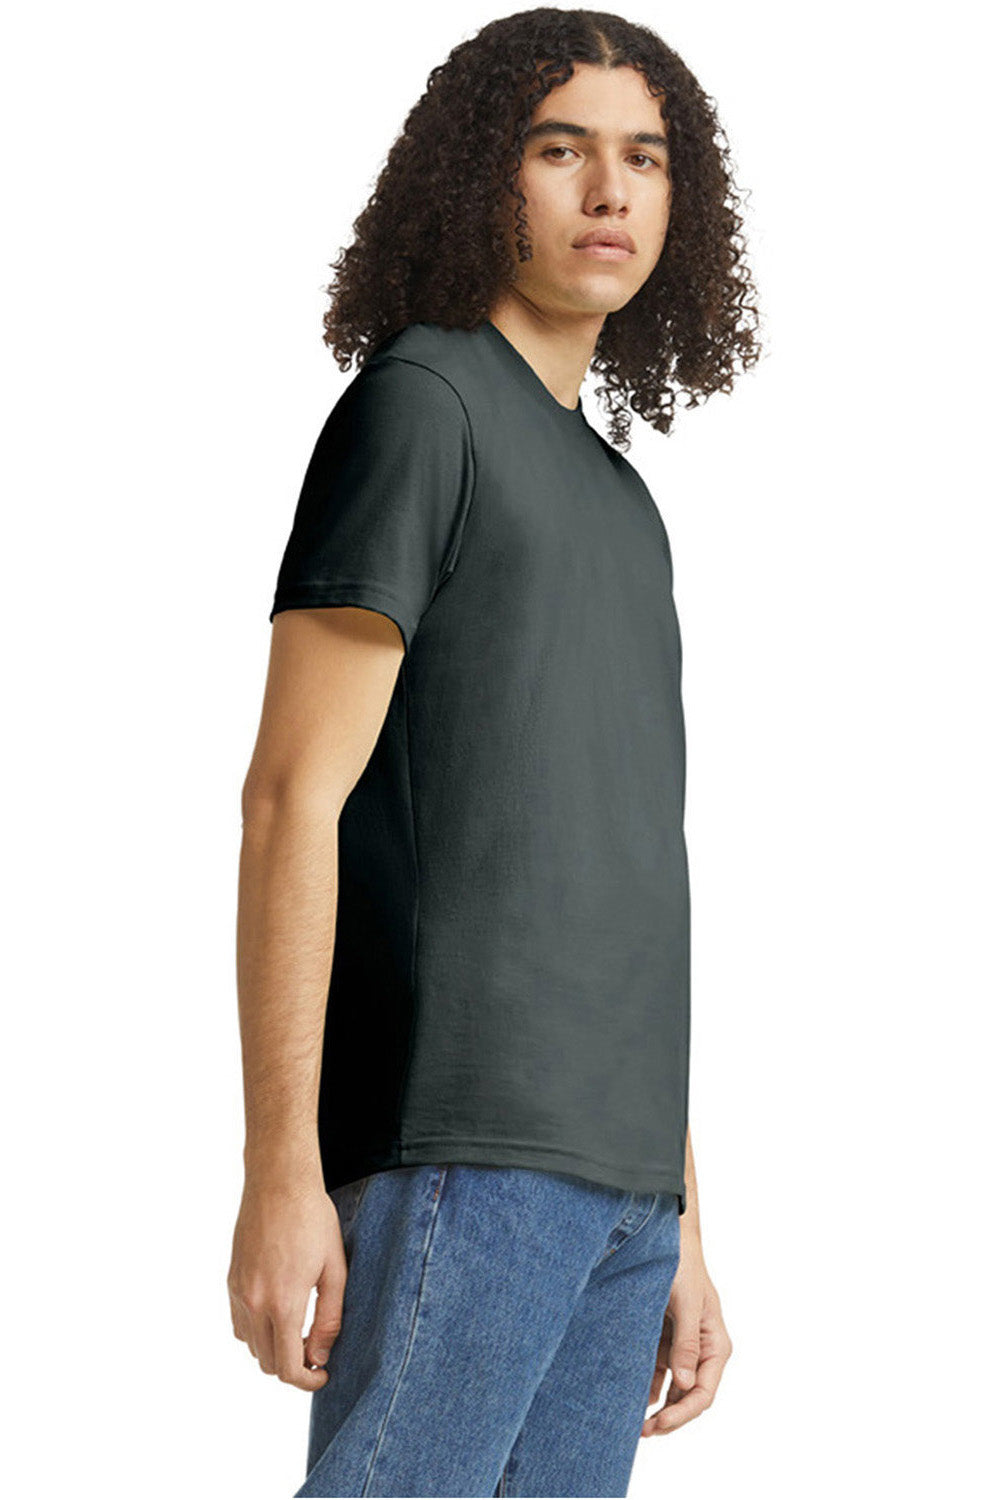 American Apparel 2001CVC Mens CVC Short Sleeve Crewneck T-Shirt Heather Charcoal Grey Model Side